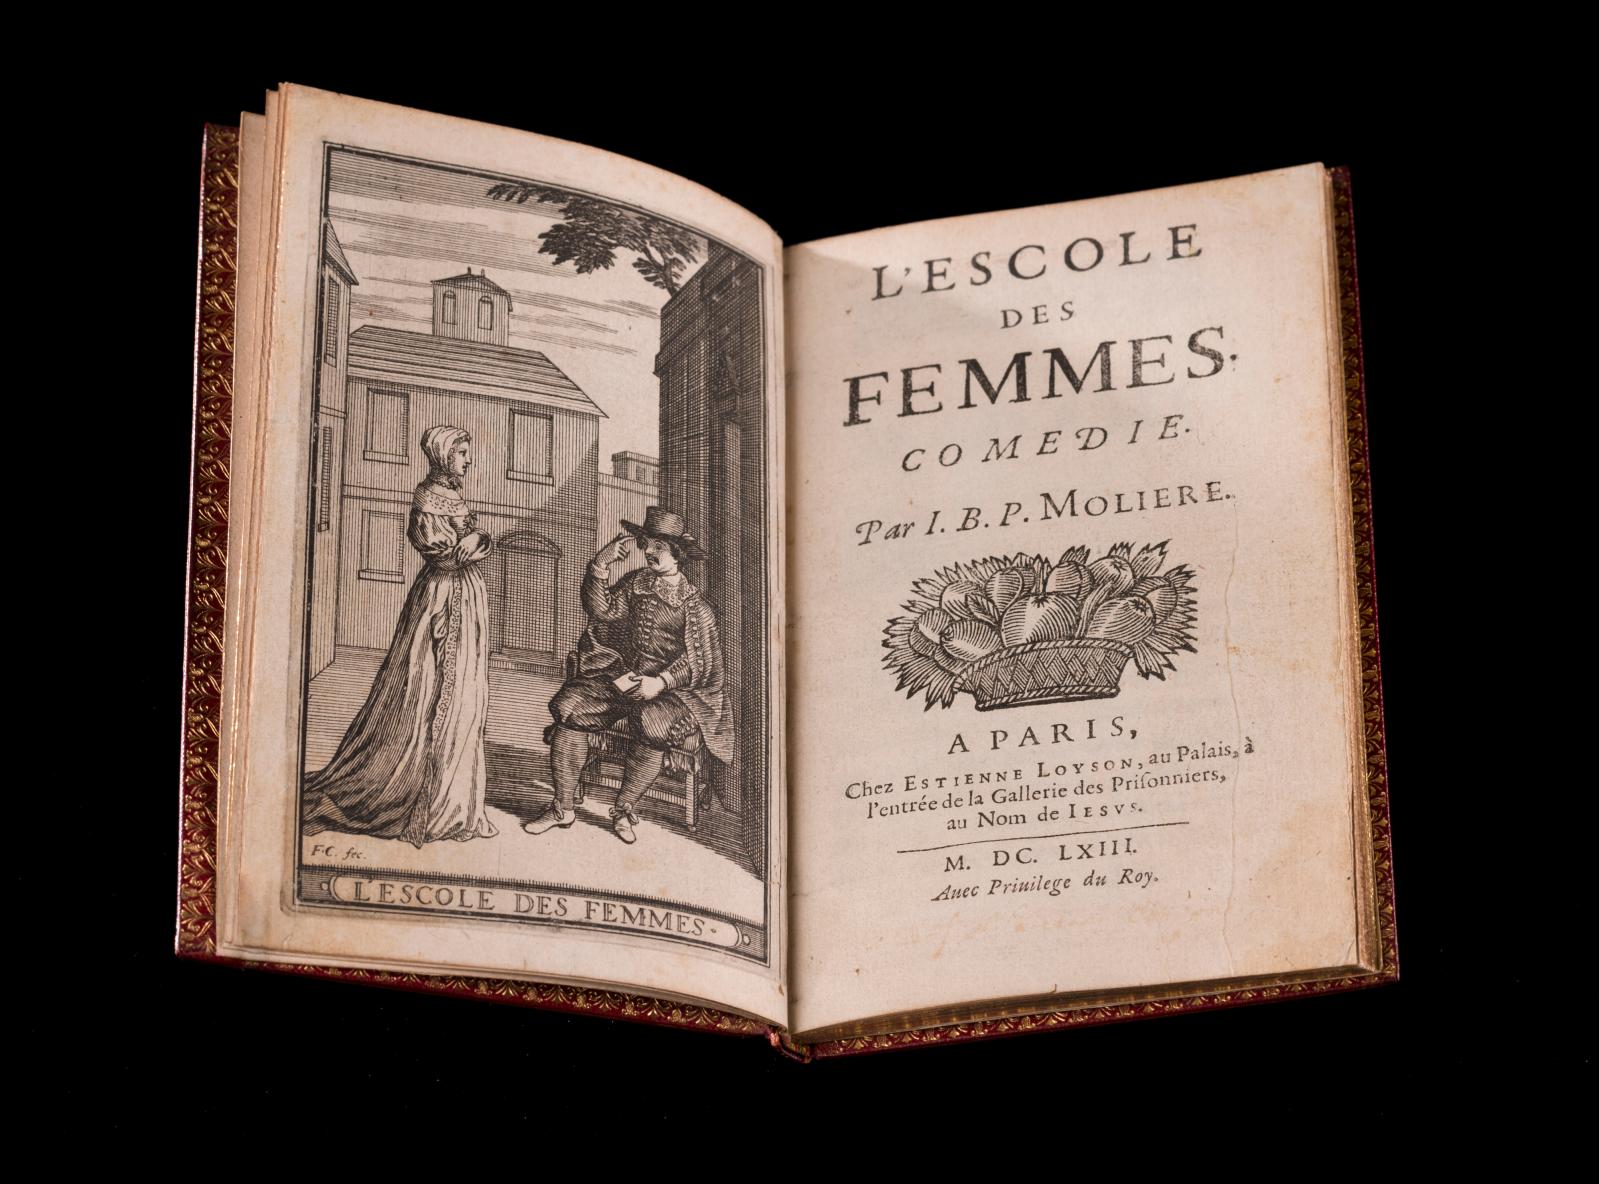 Molière (1622-1673), “L' Ecole des femmes”, comedy, 1663, Paris, red Jansenist morocco, late 19th century, gilt spine, small duodecimo format (147 x 9